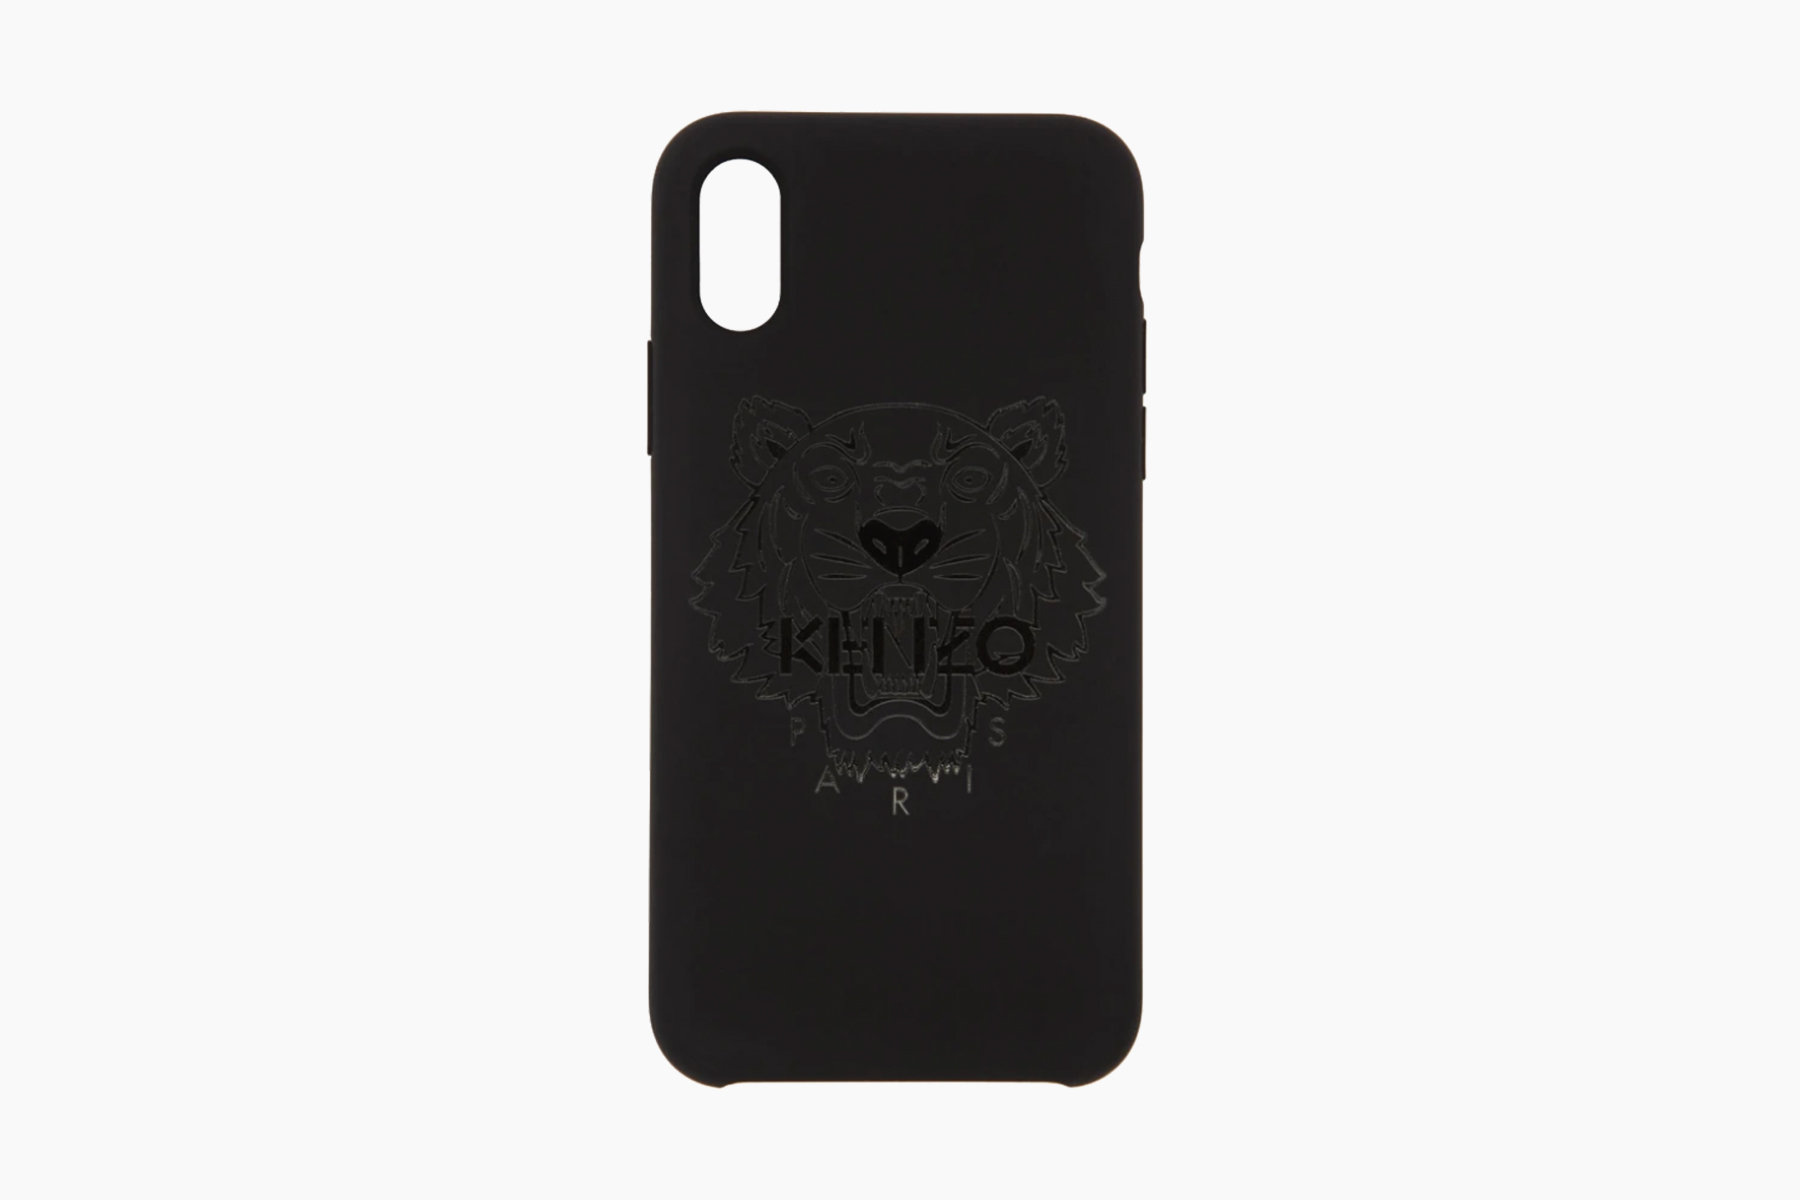 Souvenir Raak verstrikt breedtegraad Kenzo Black Tiger iPhone X Case Release Price | Drops | Hypebeast